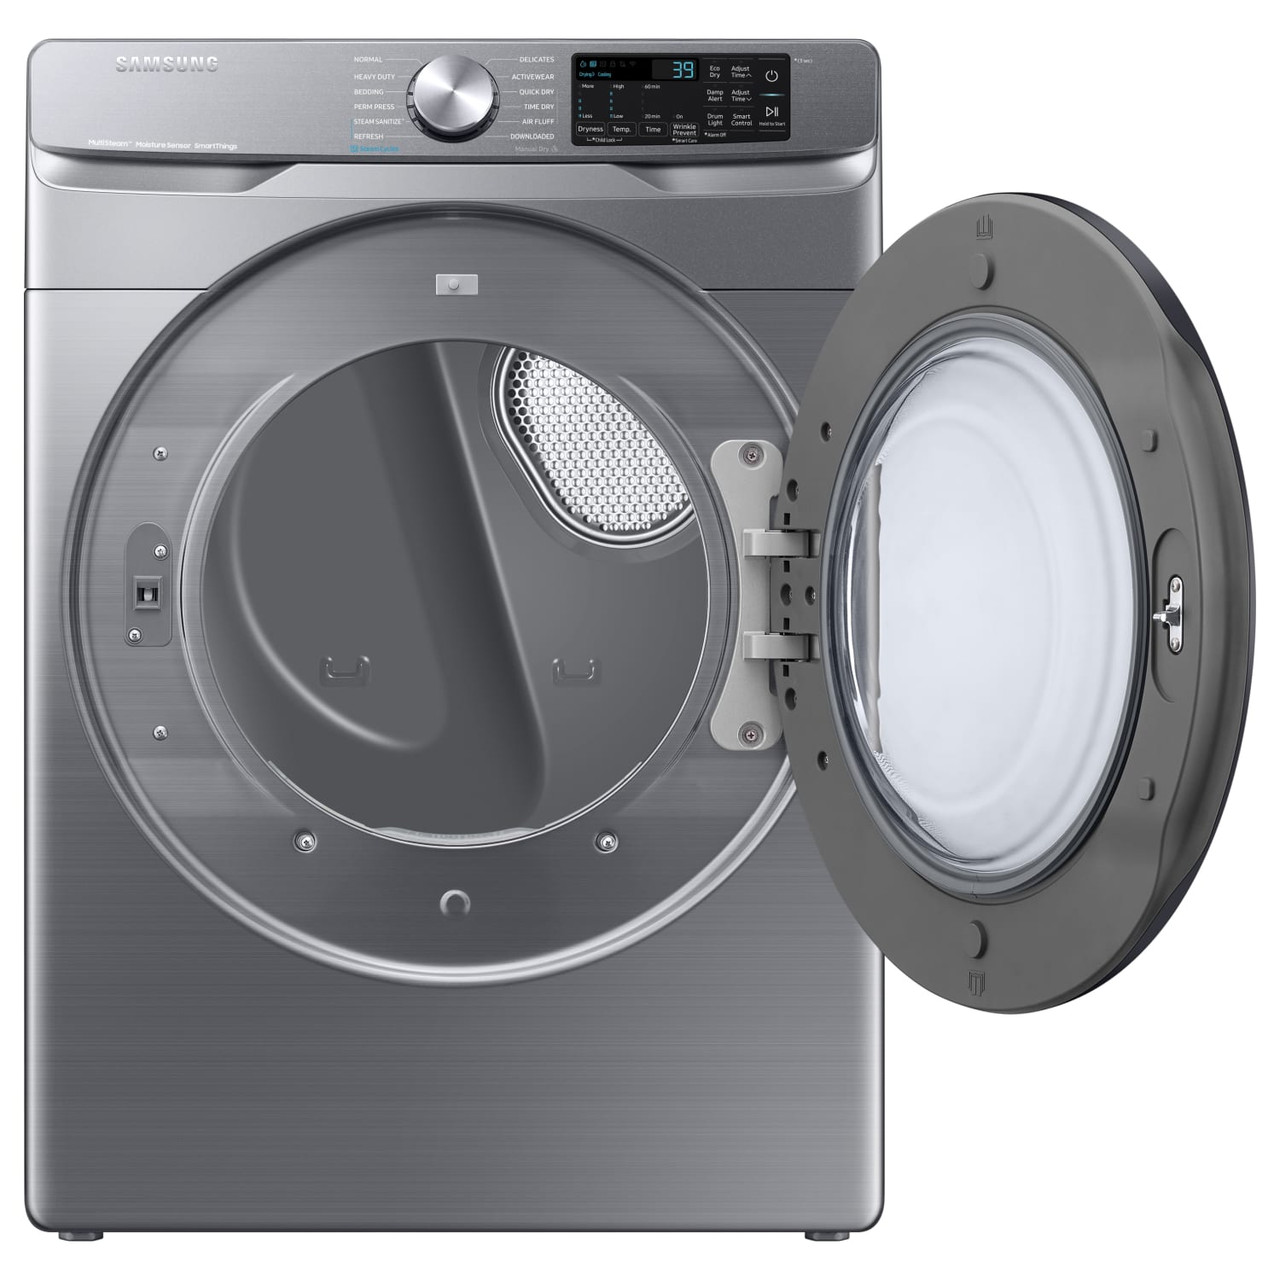 Samsung 7.5 Cu. Ft. Electric Dryer with Steam Sanitize+ in Platinum - DVE45B6300P